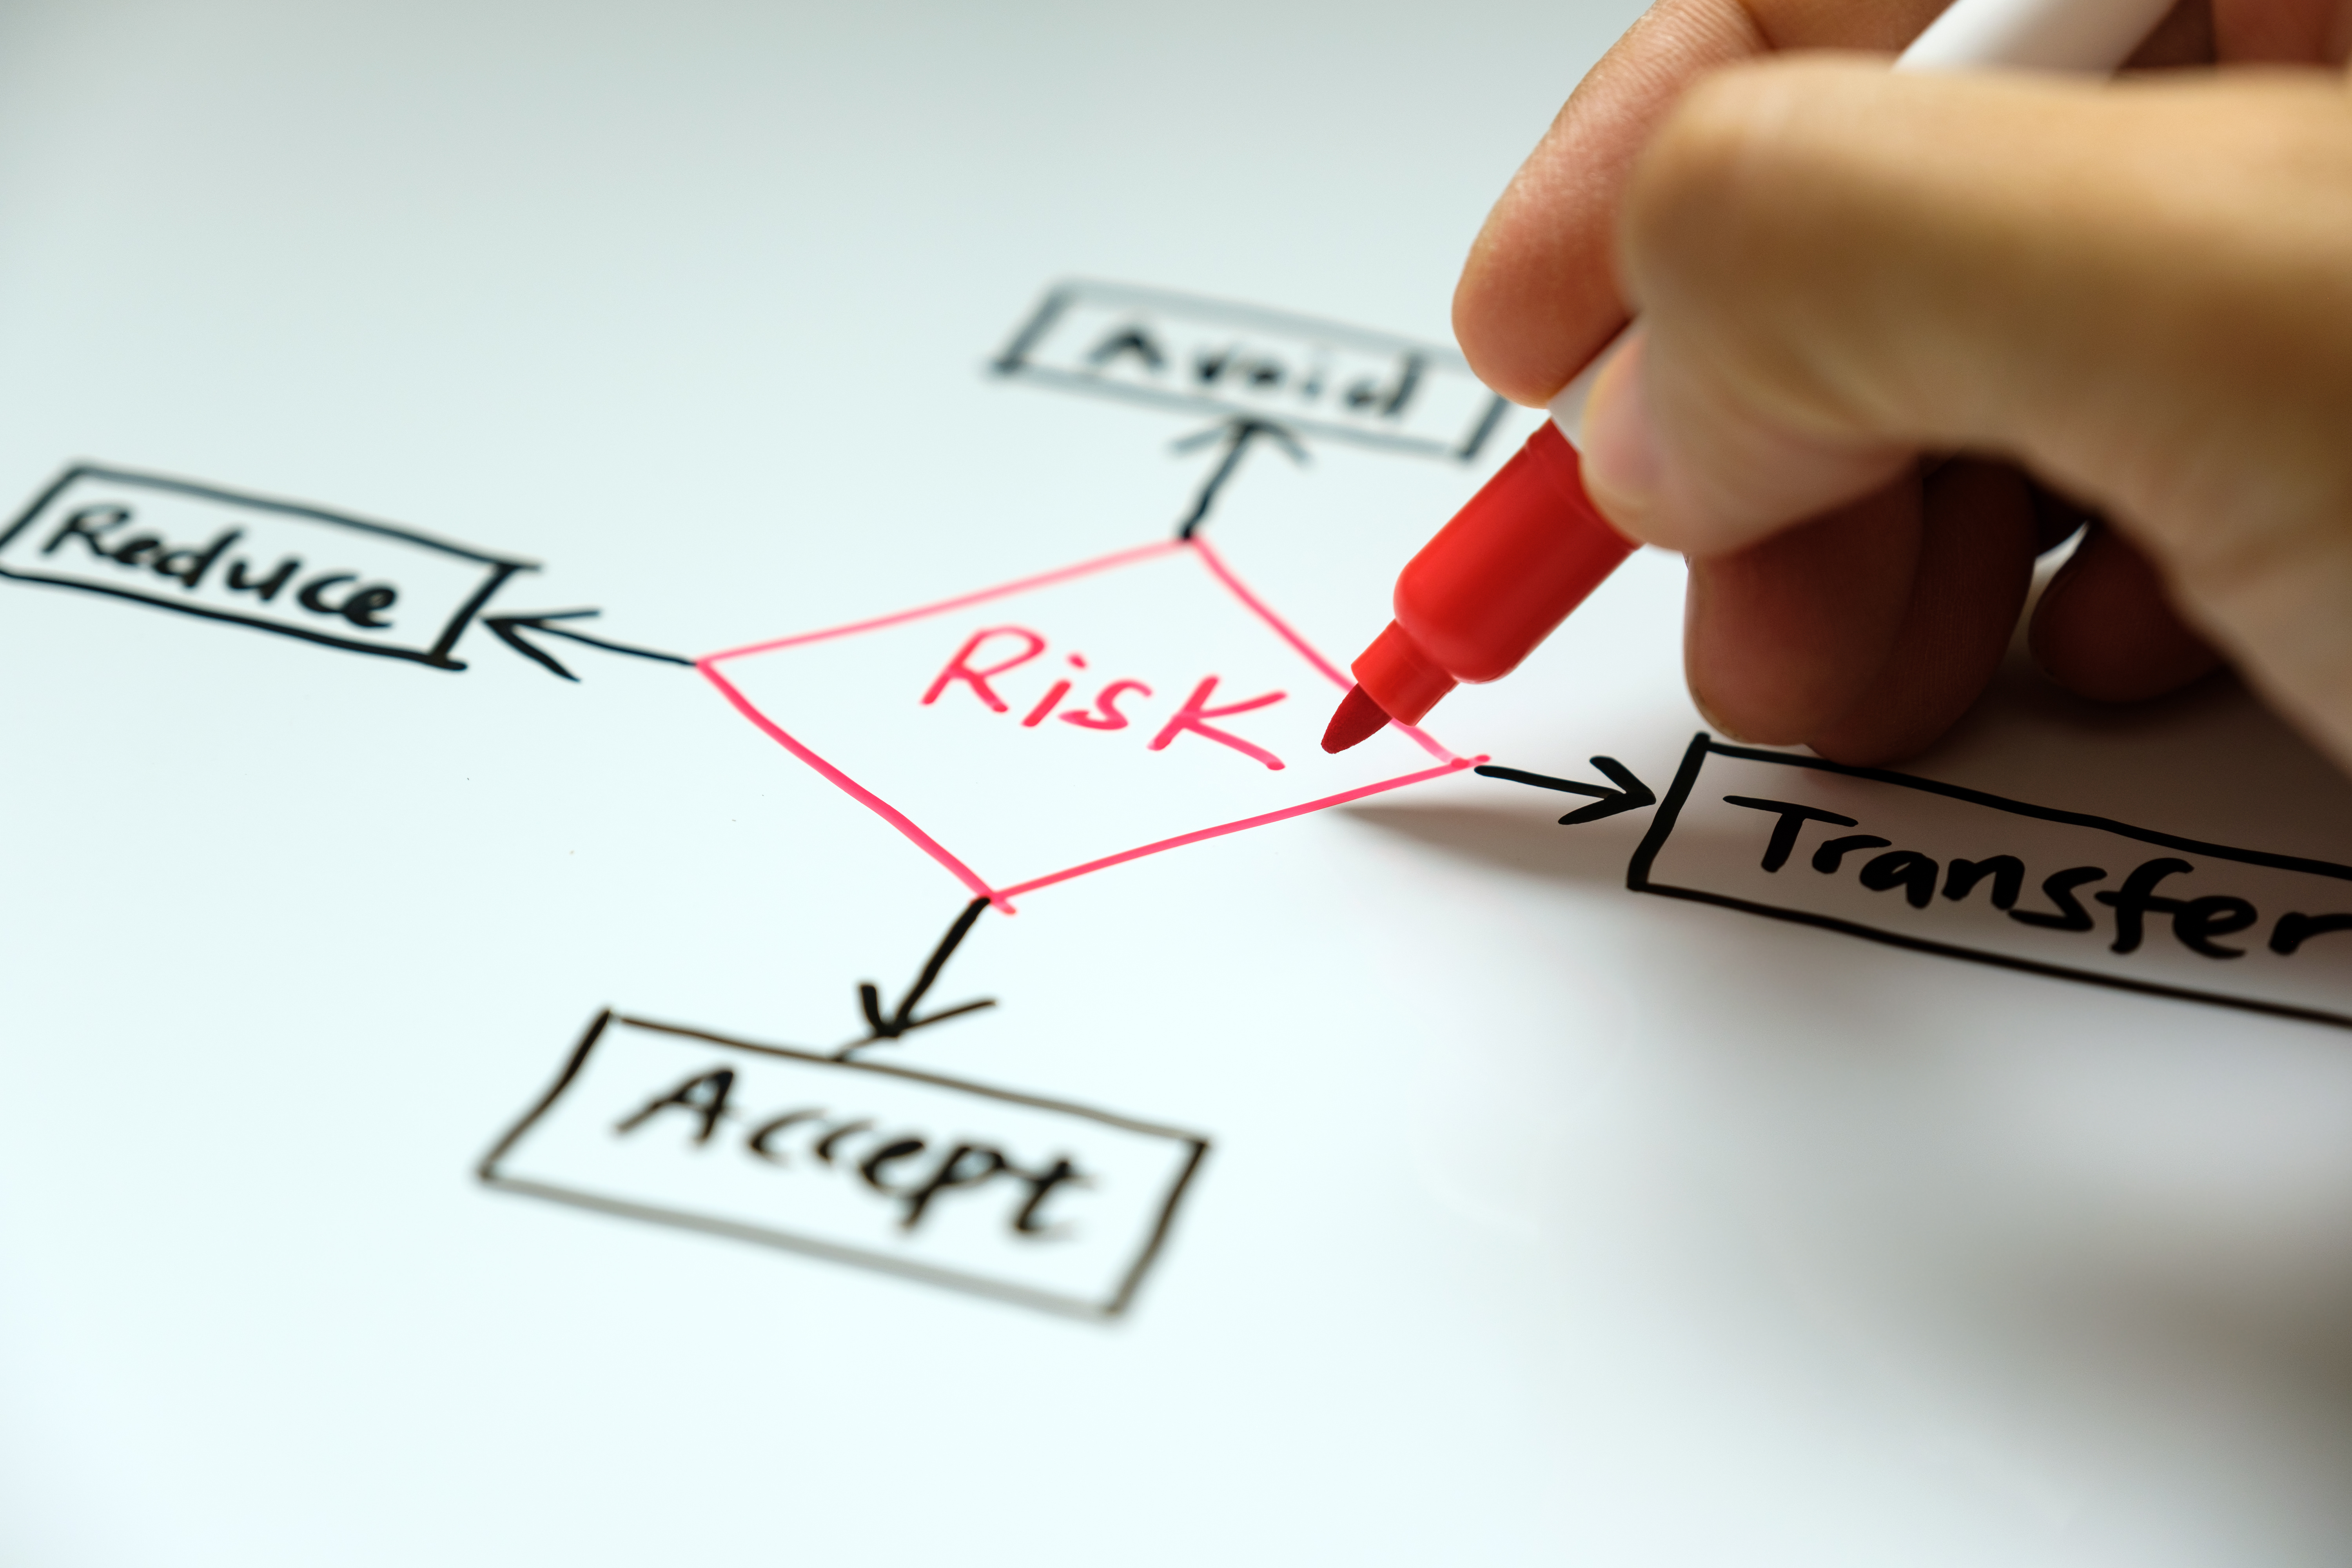 Supplier Risk Management